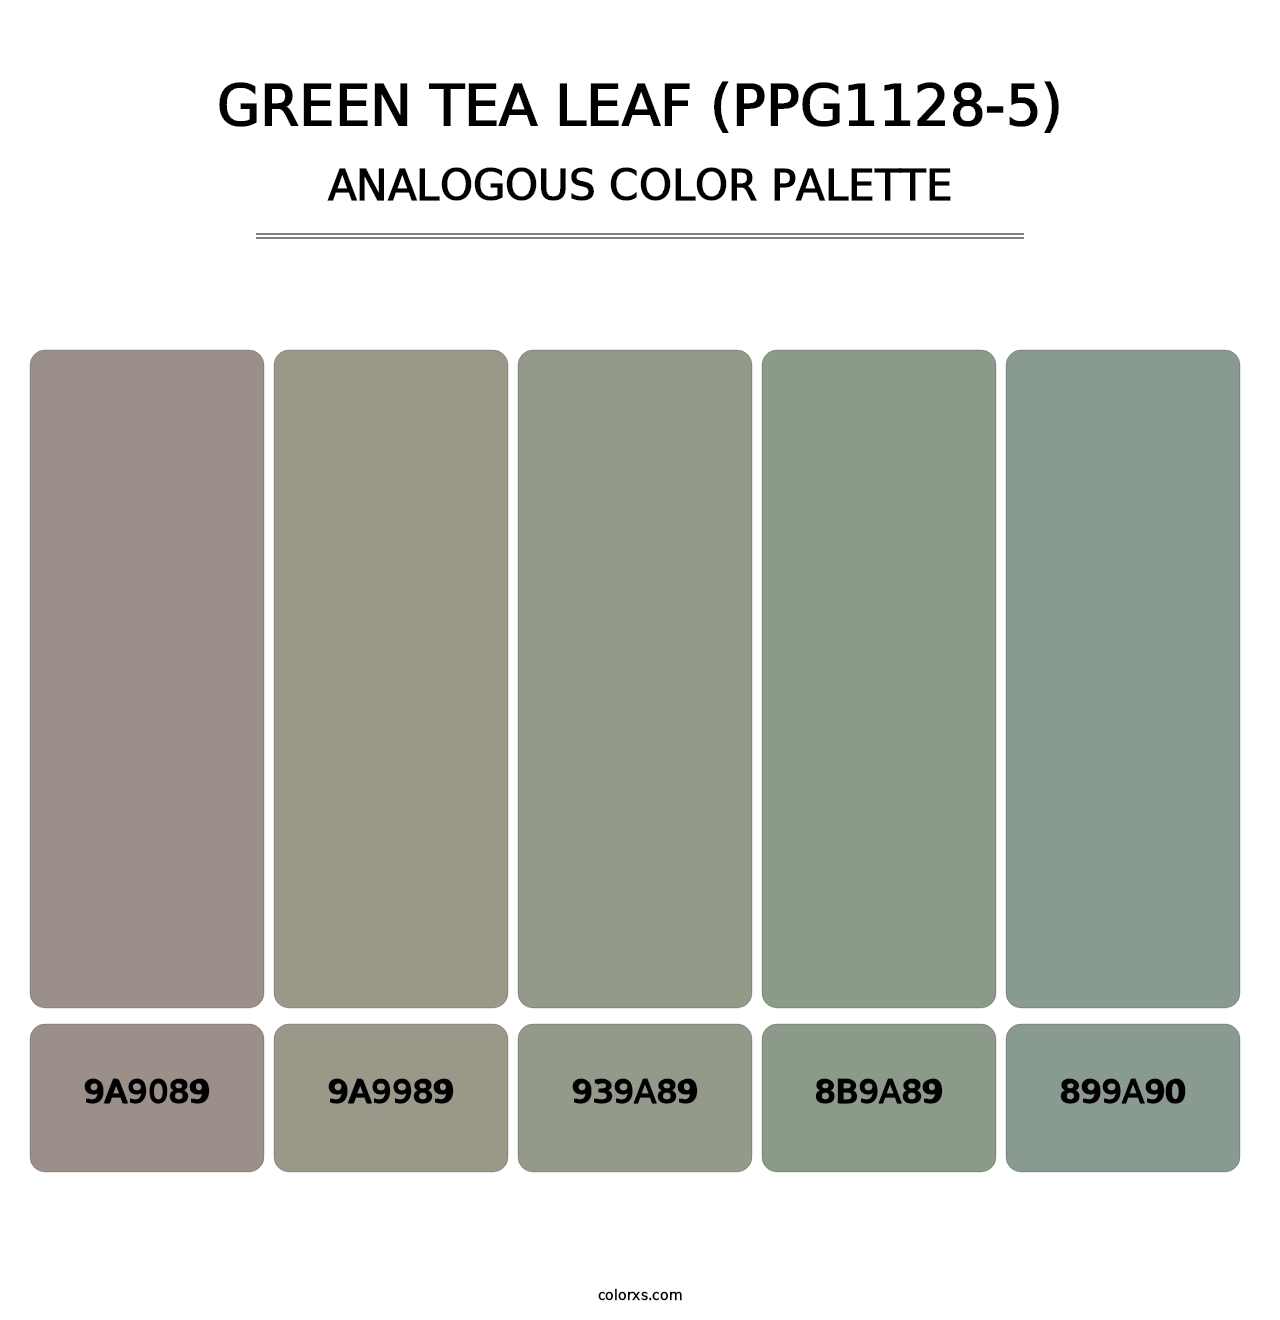 Green Tea Leaf (PPG1128-5) - Analogous Color Palette